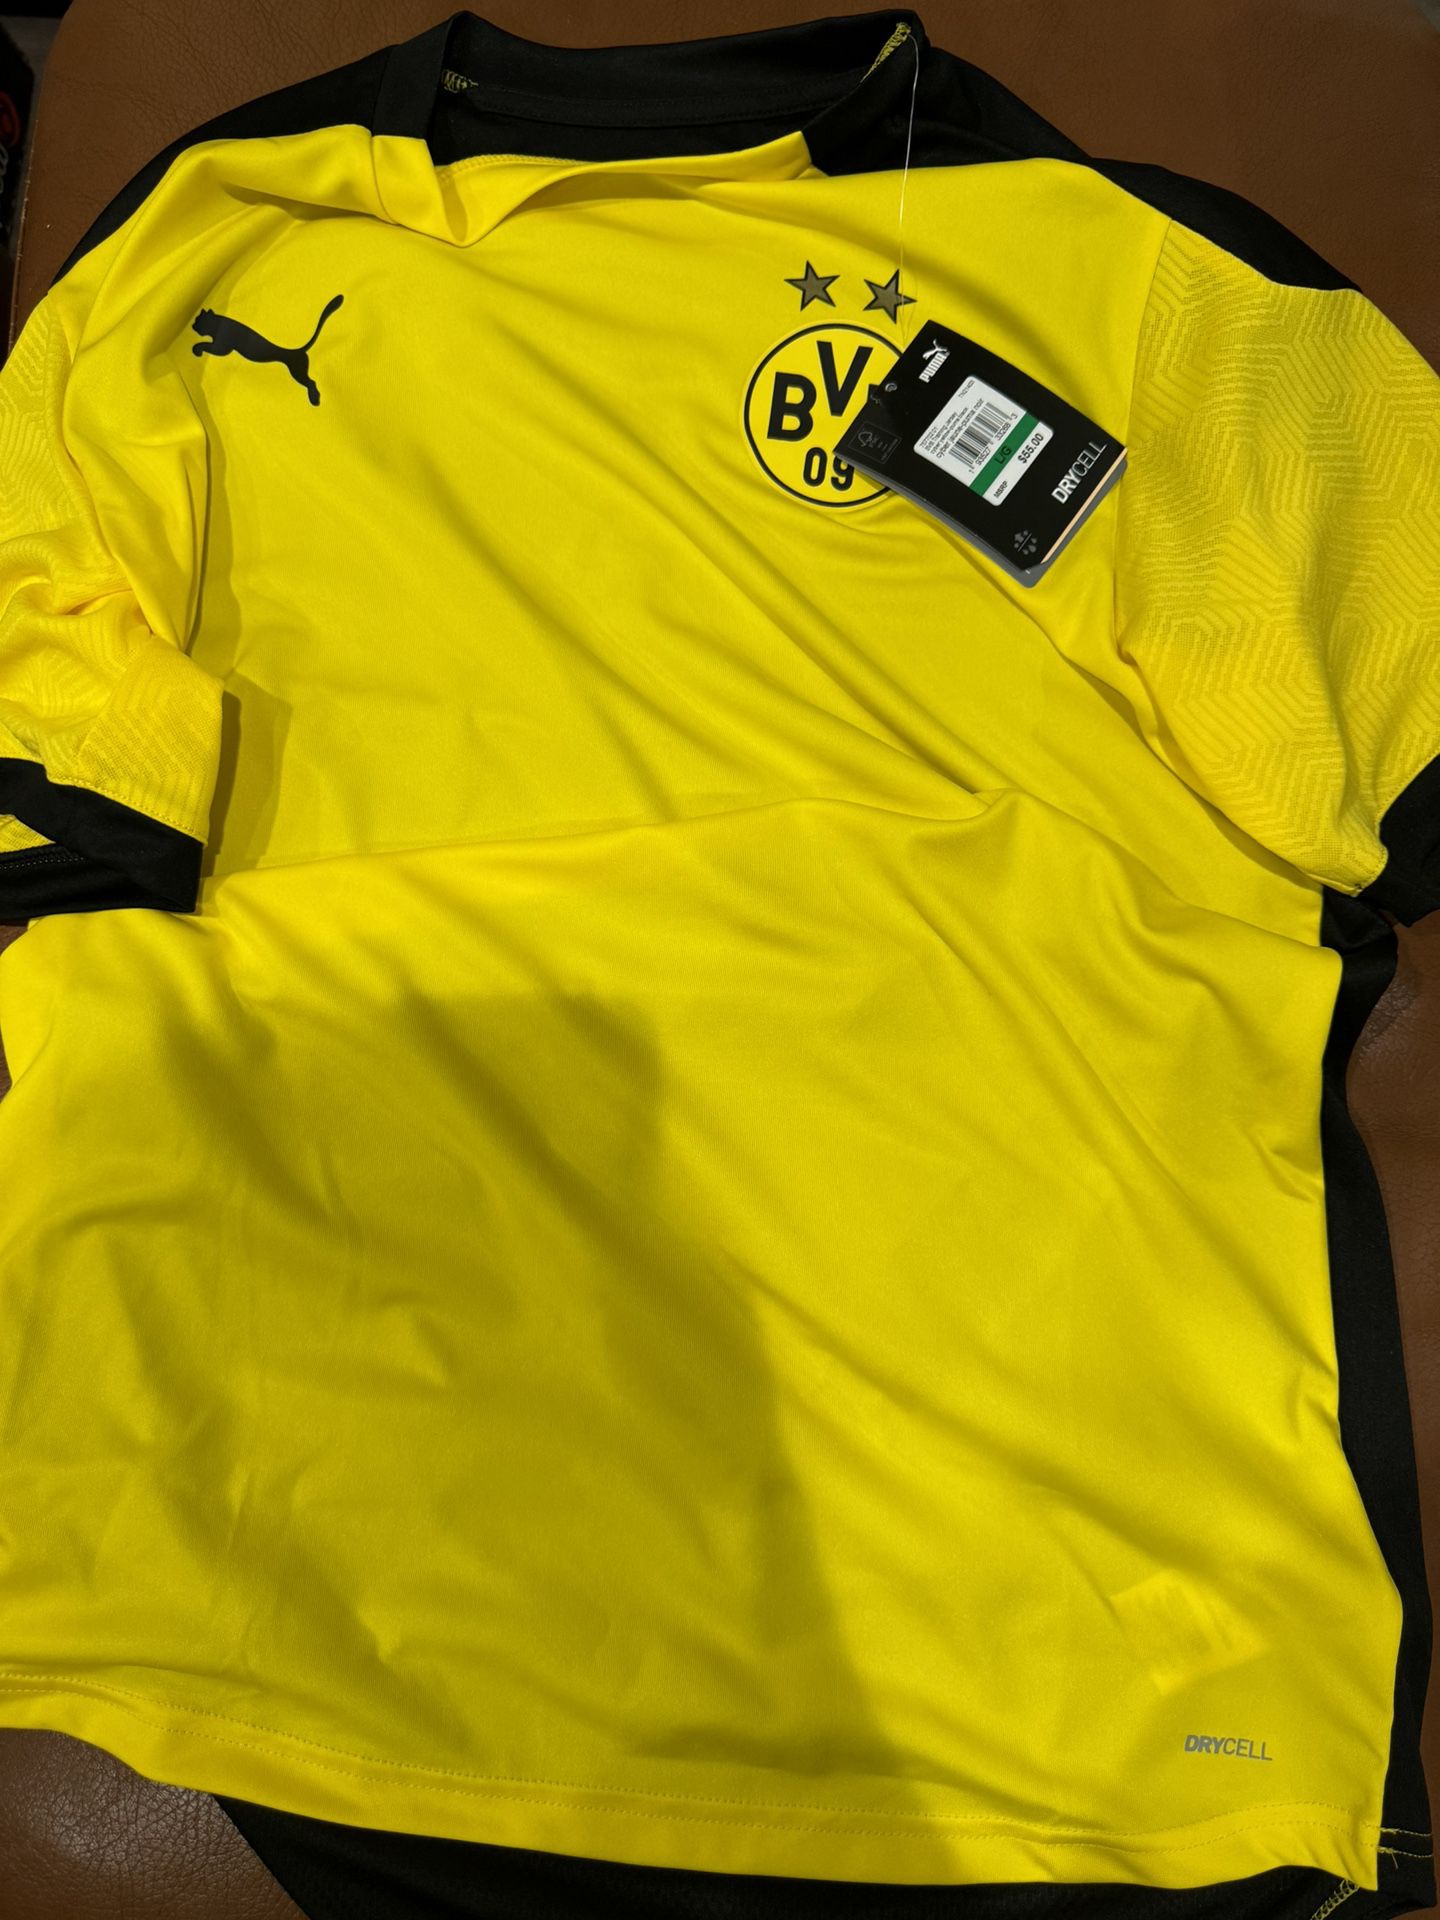 Puma Borrusia Dortmund Soccer Jersey Size Large Men New 